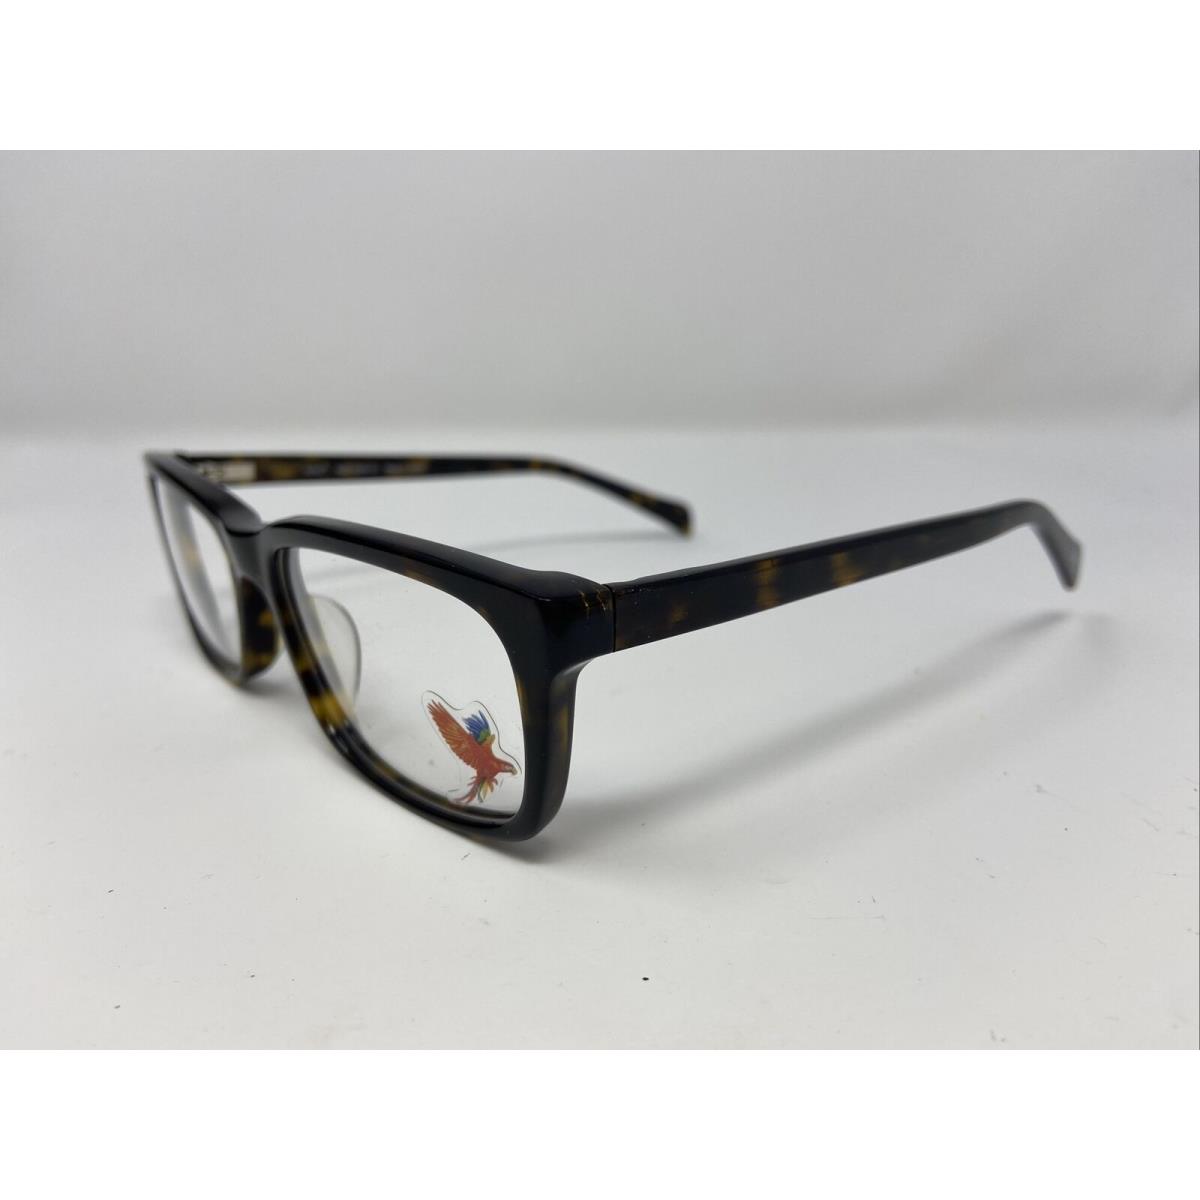 Maui Jim eyeglasses  - Brown Frame 0